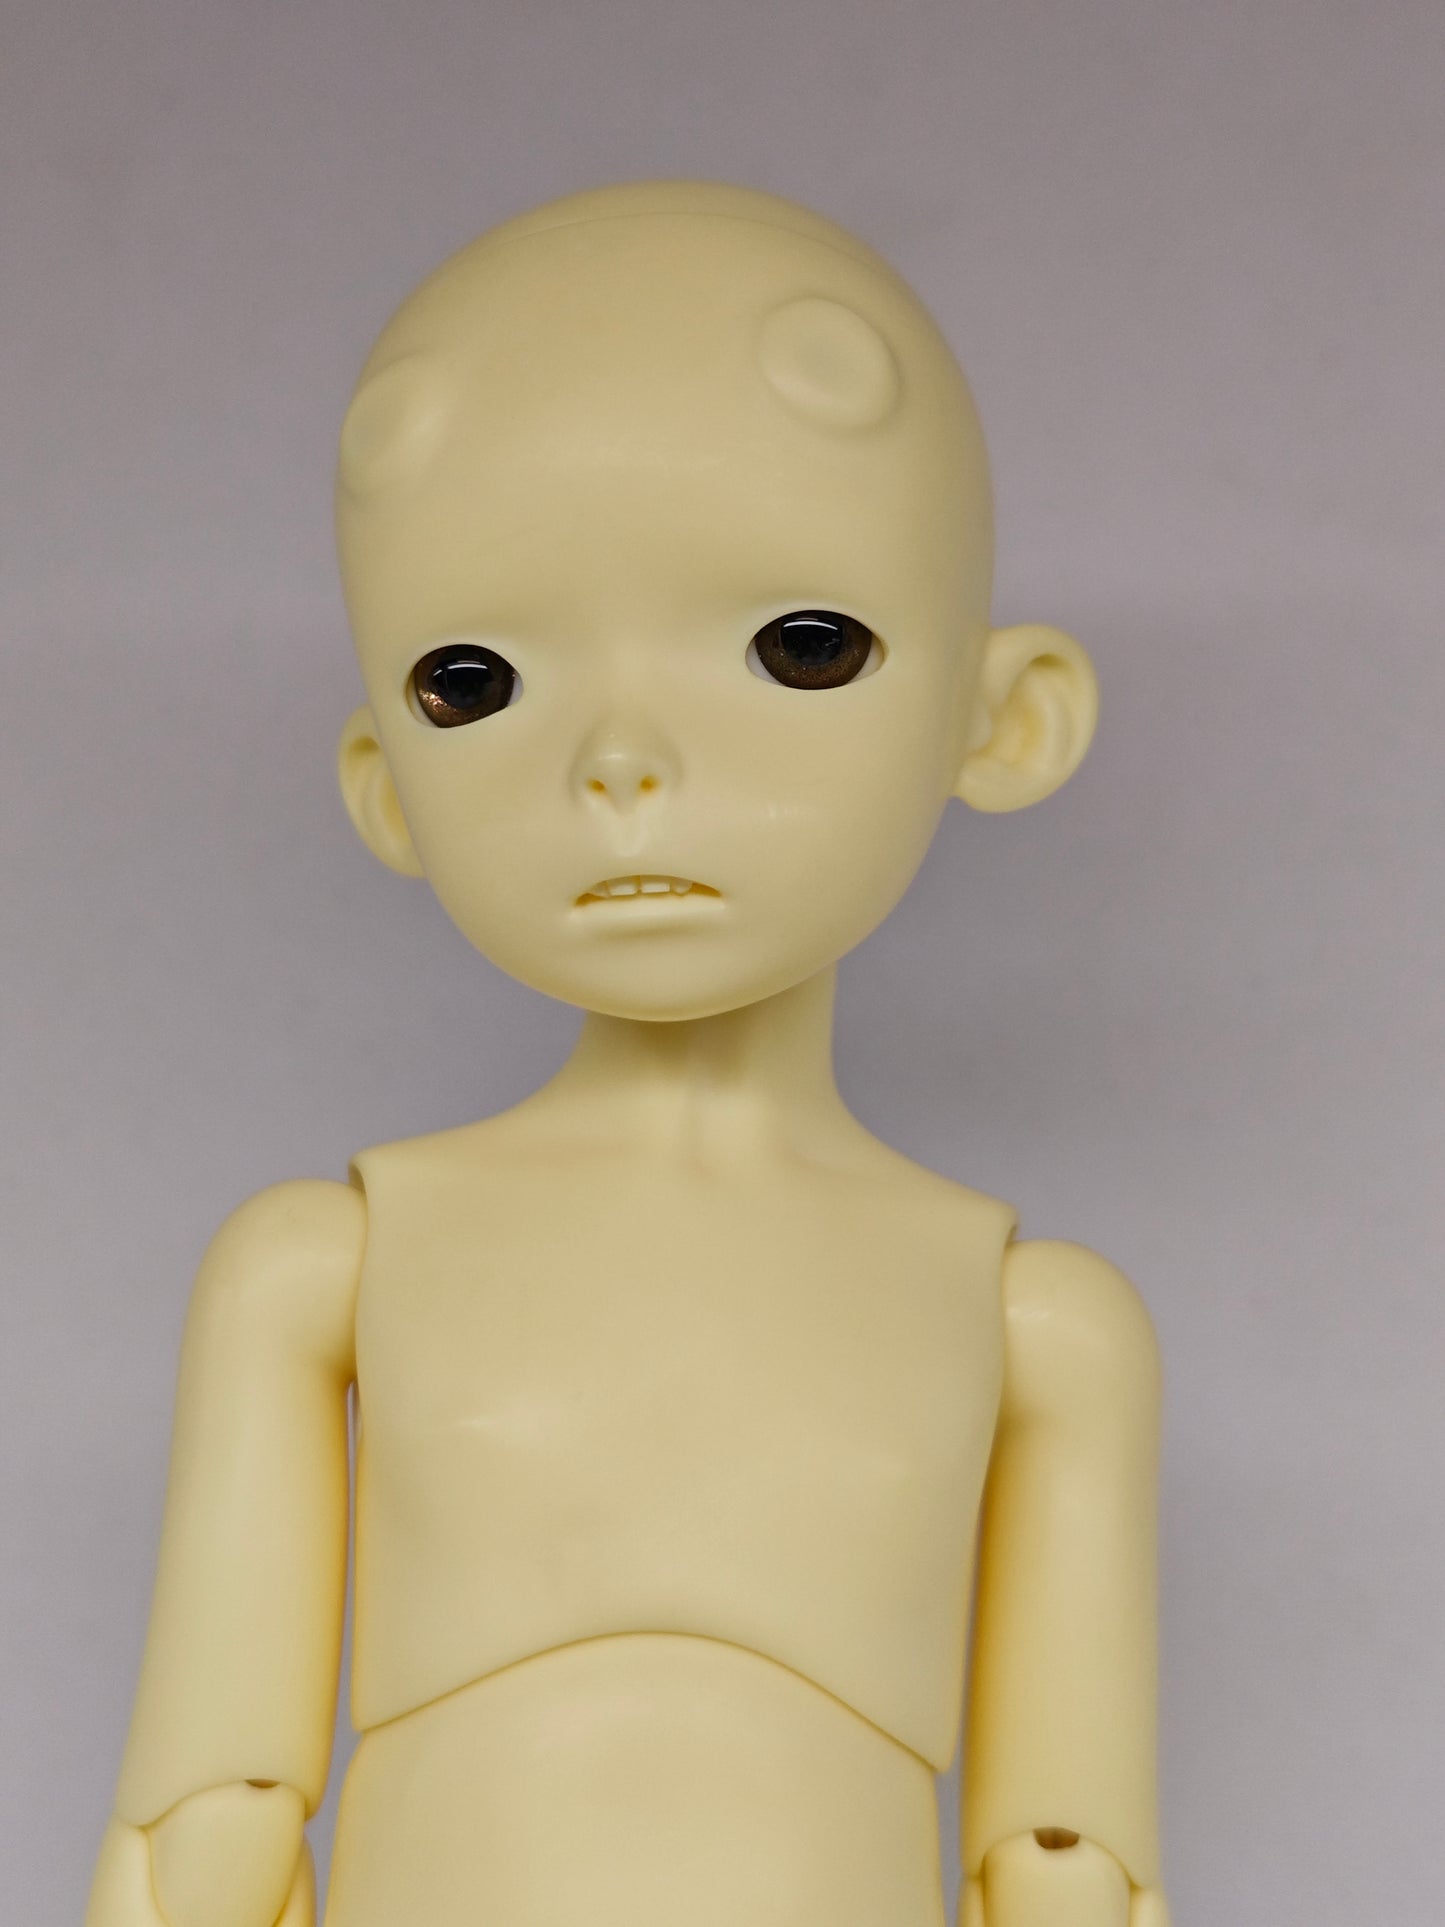 1/6 30cm boy doll Aiden white skin with glass eyes